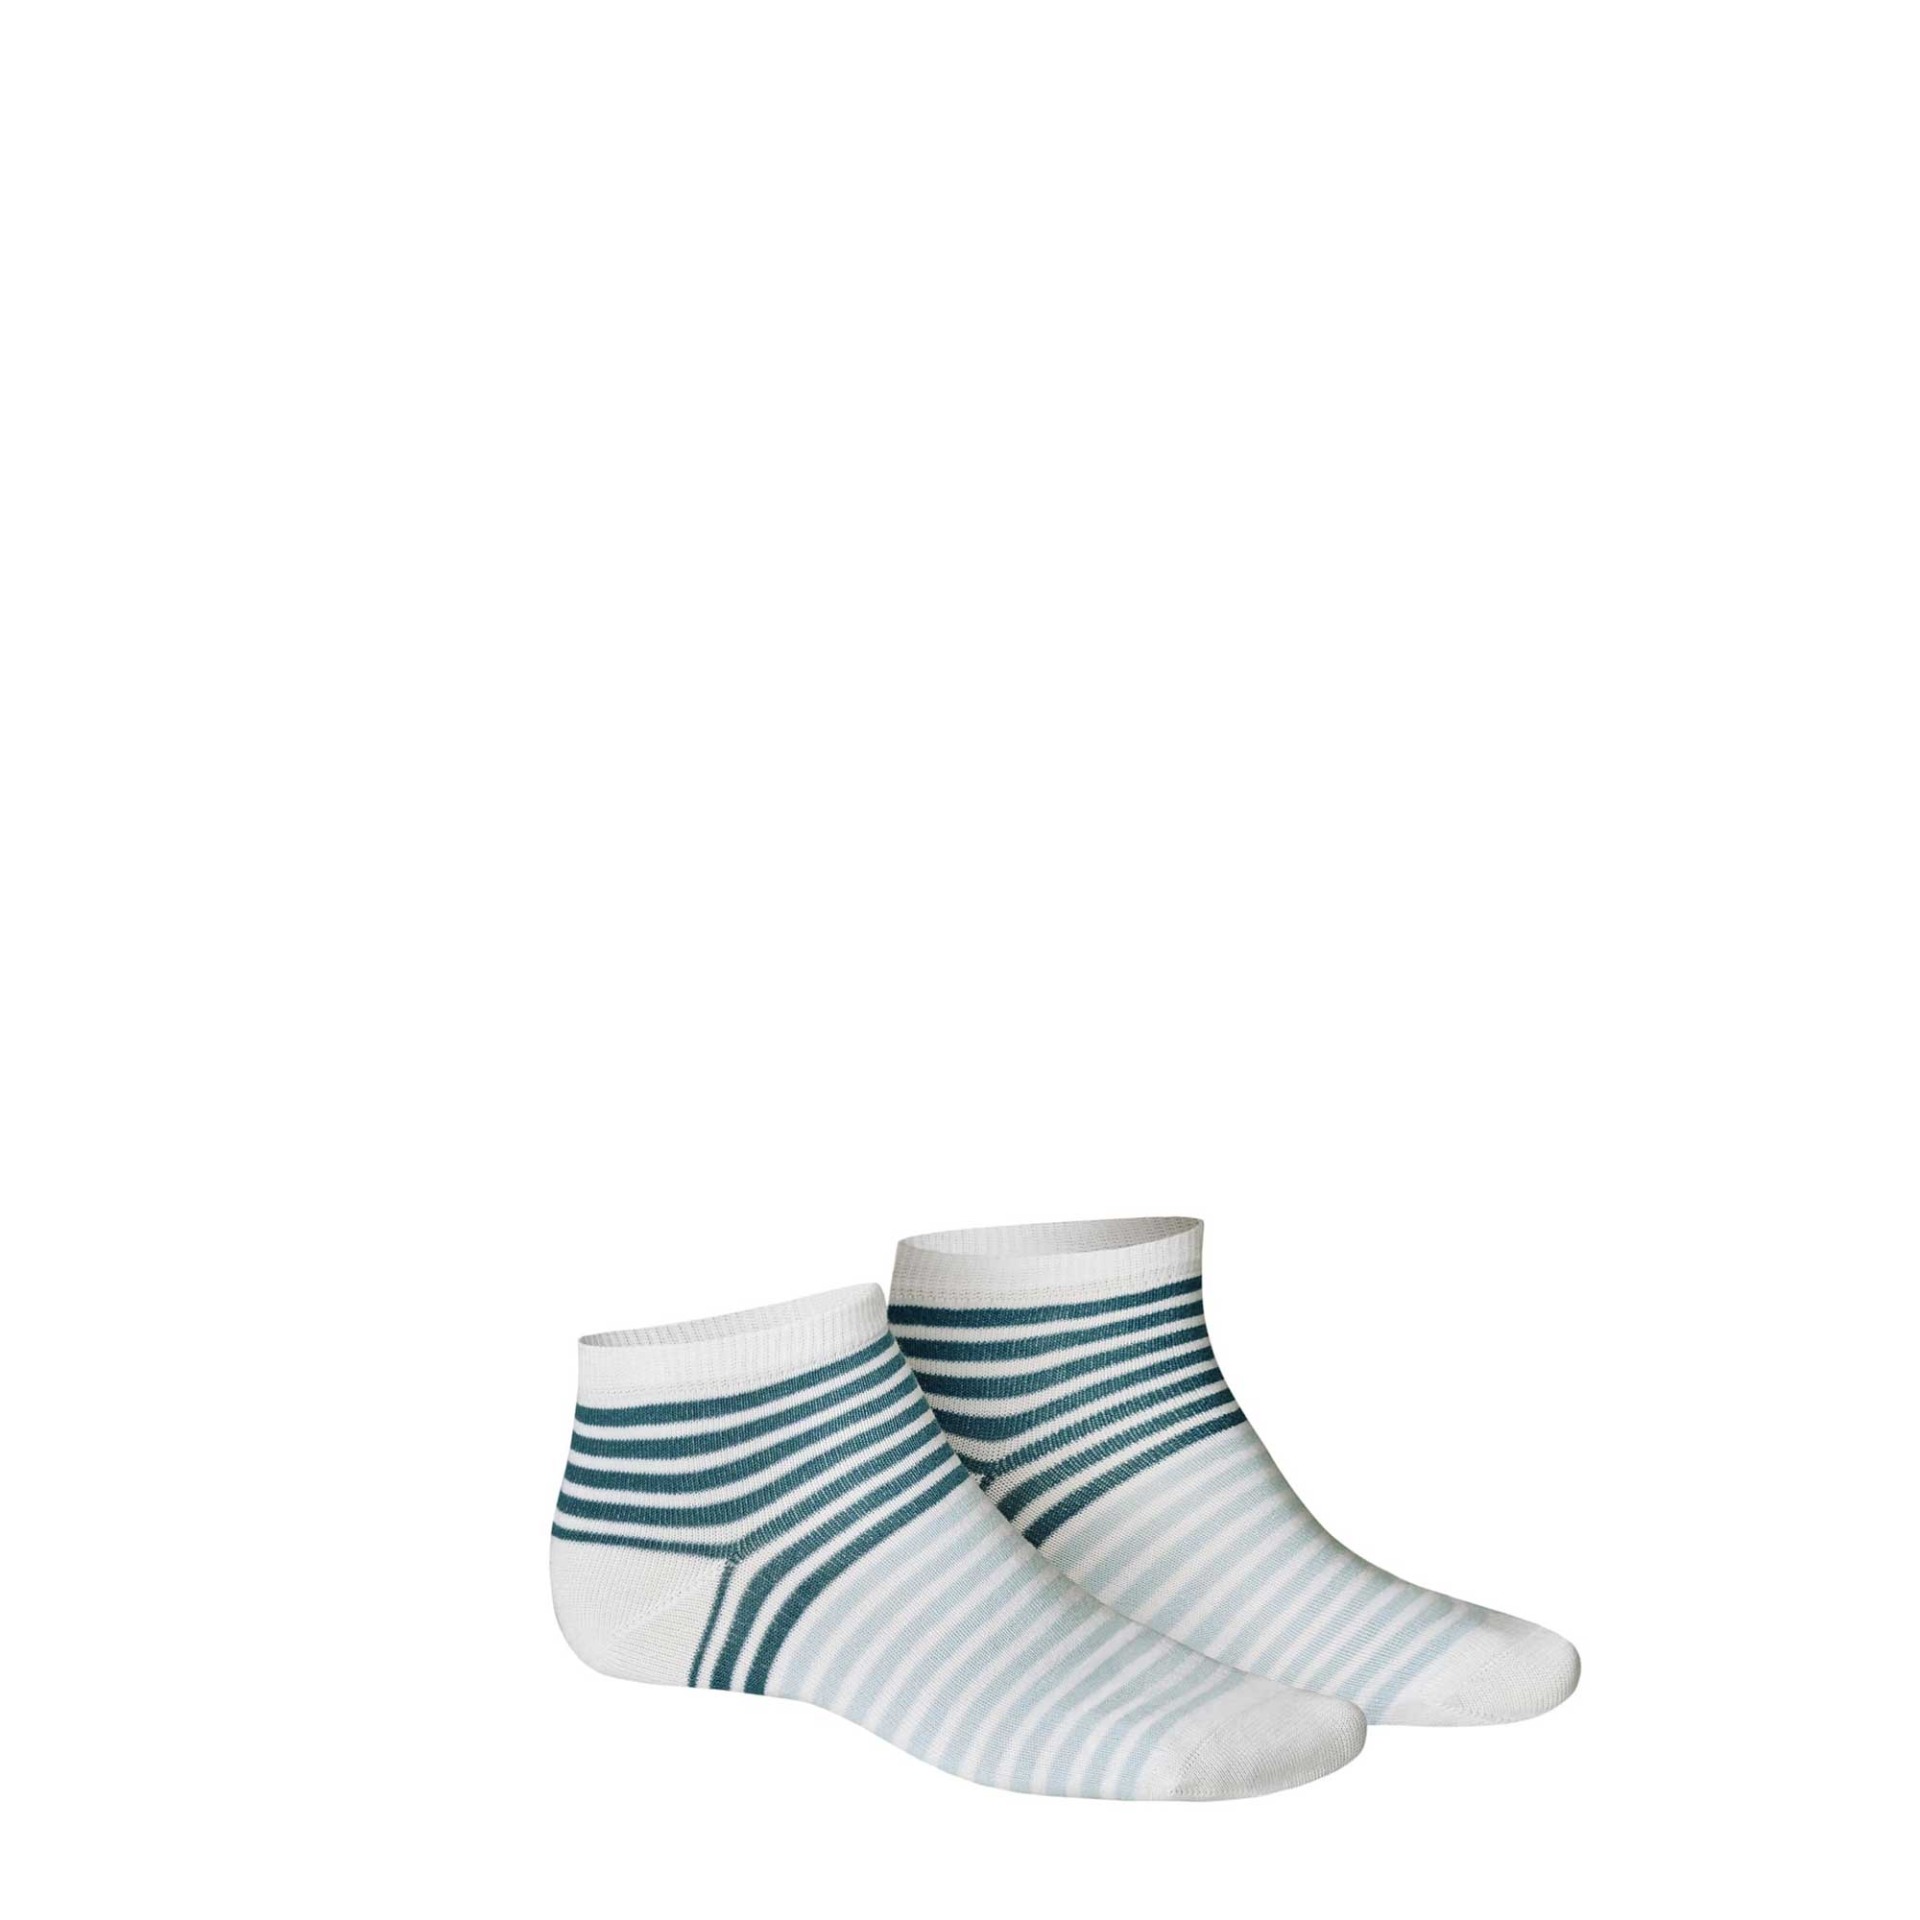 HUDSON Herren TWICE -  39/42 - Herren Sneaker Socken mit Ringelmuster - White (Weiß)